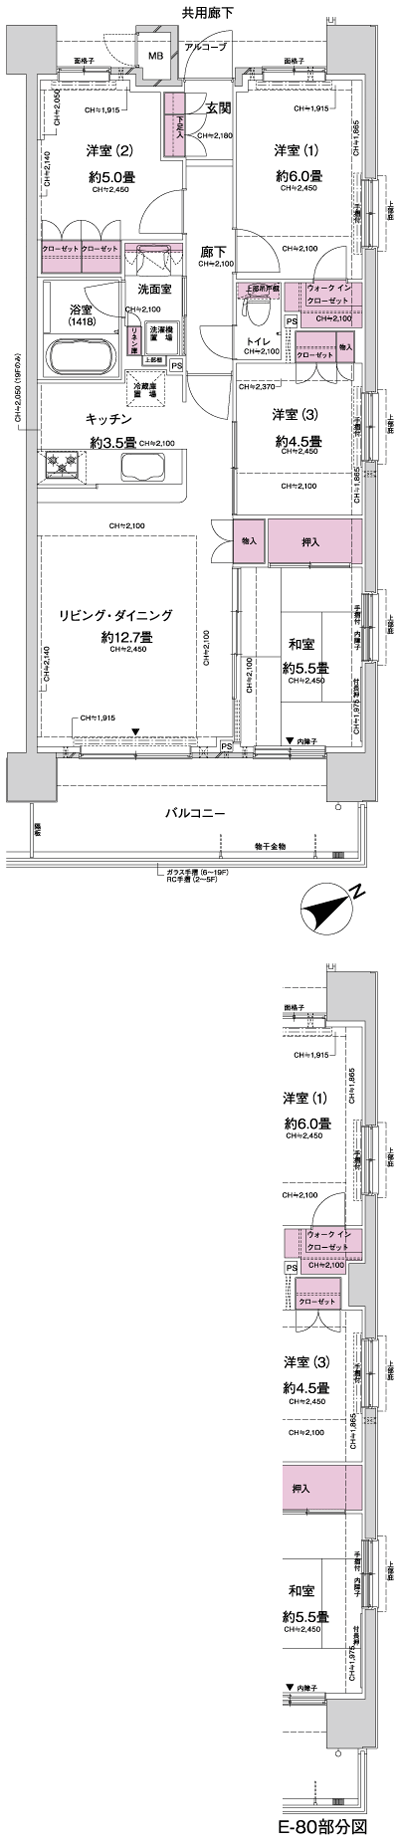 Floor: 4LDK, occupied area: 79.72 sq m, Price: 33,700,000 yen, now on sale